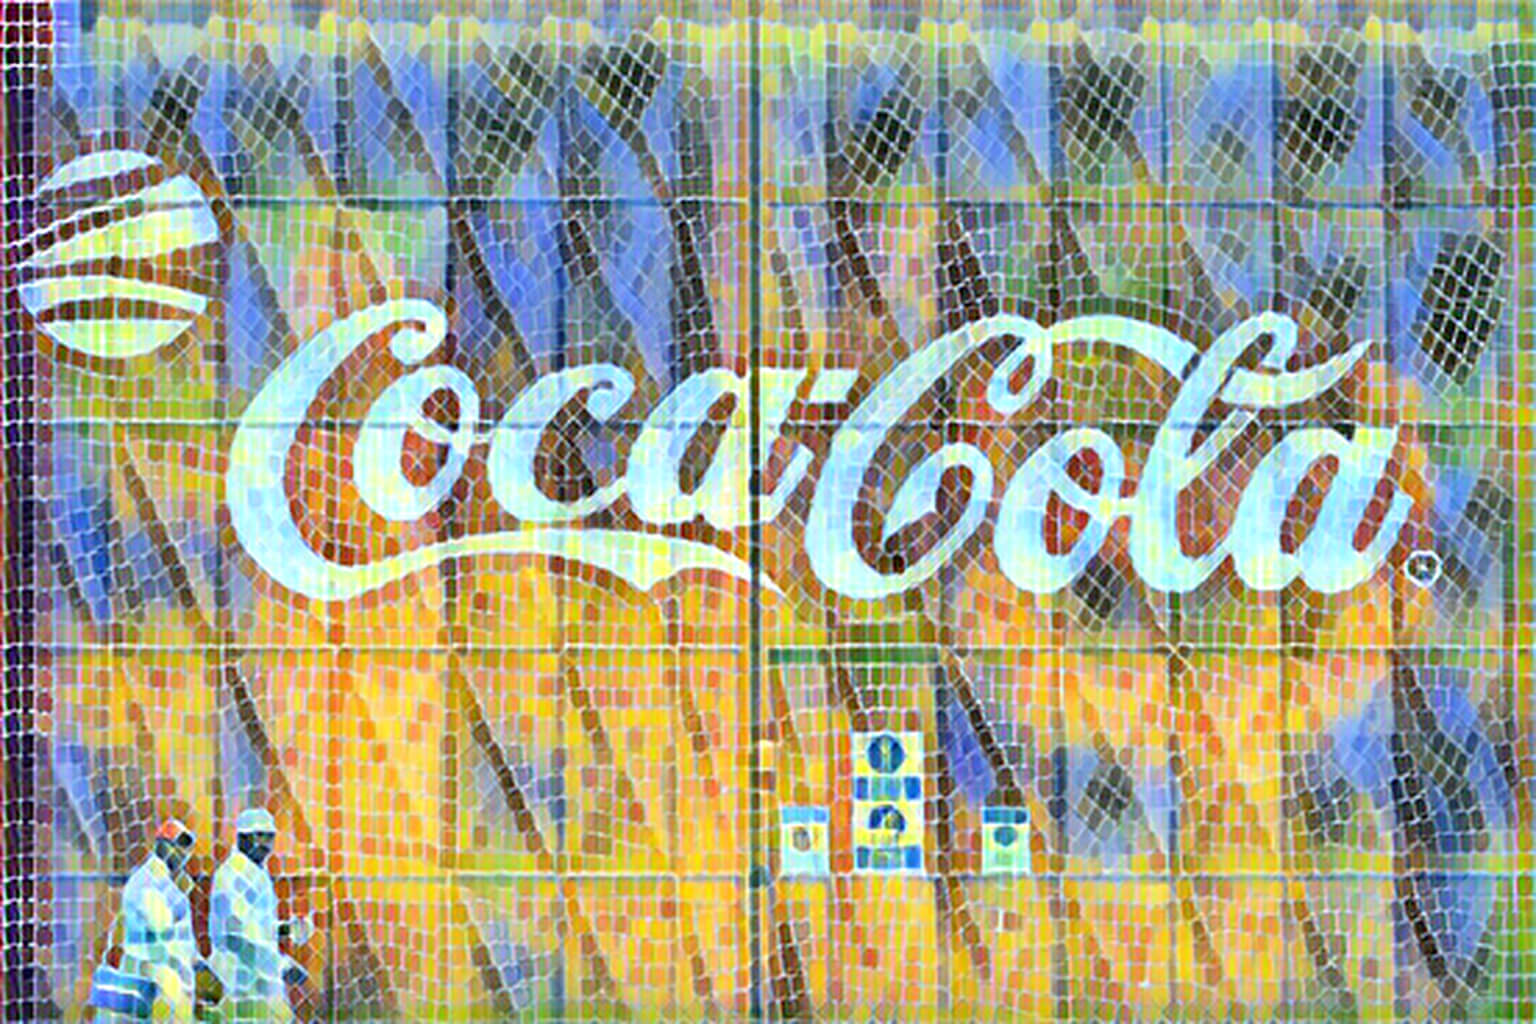  coca-cola      